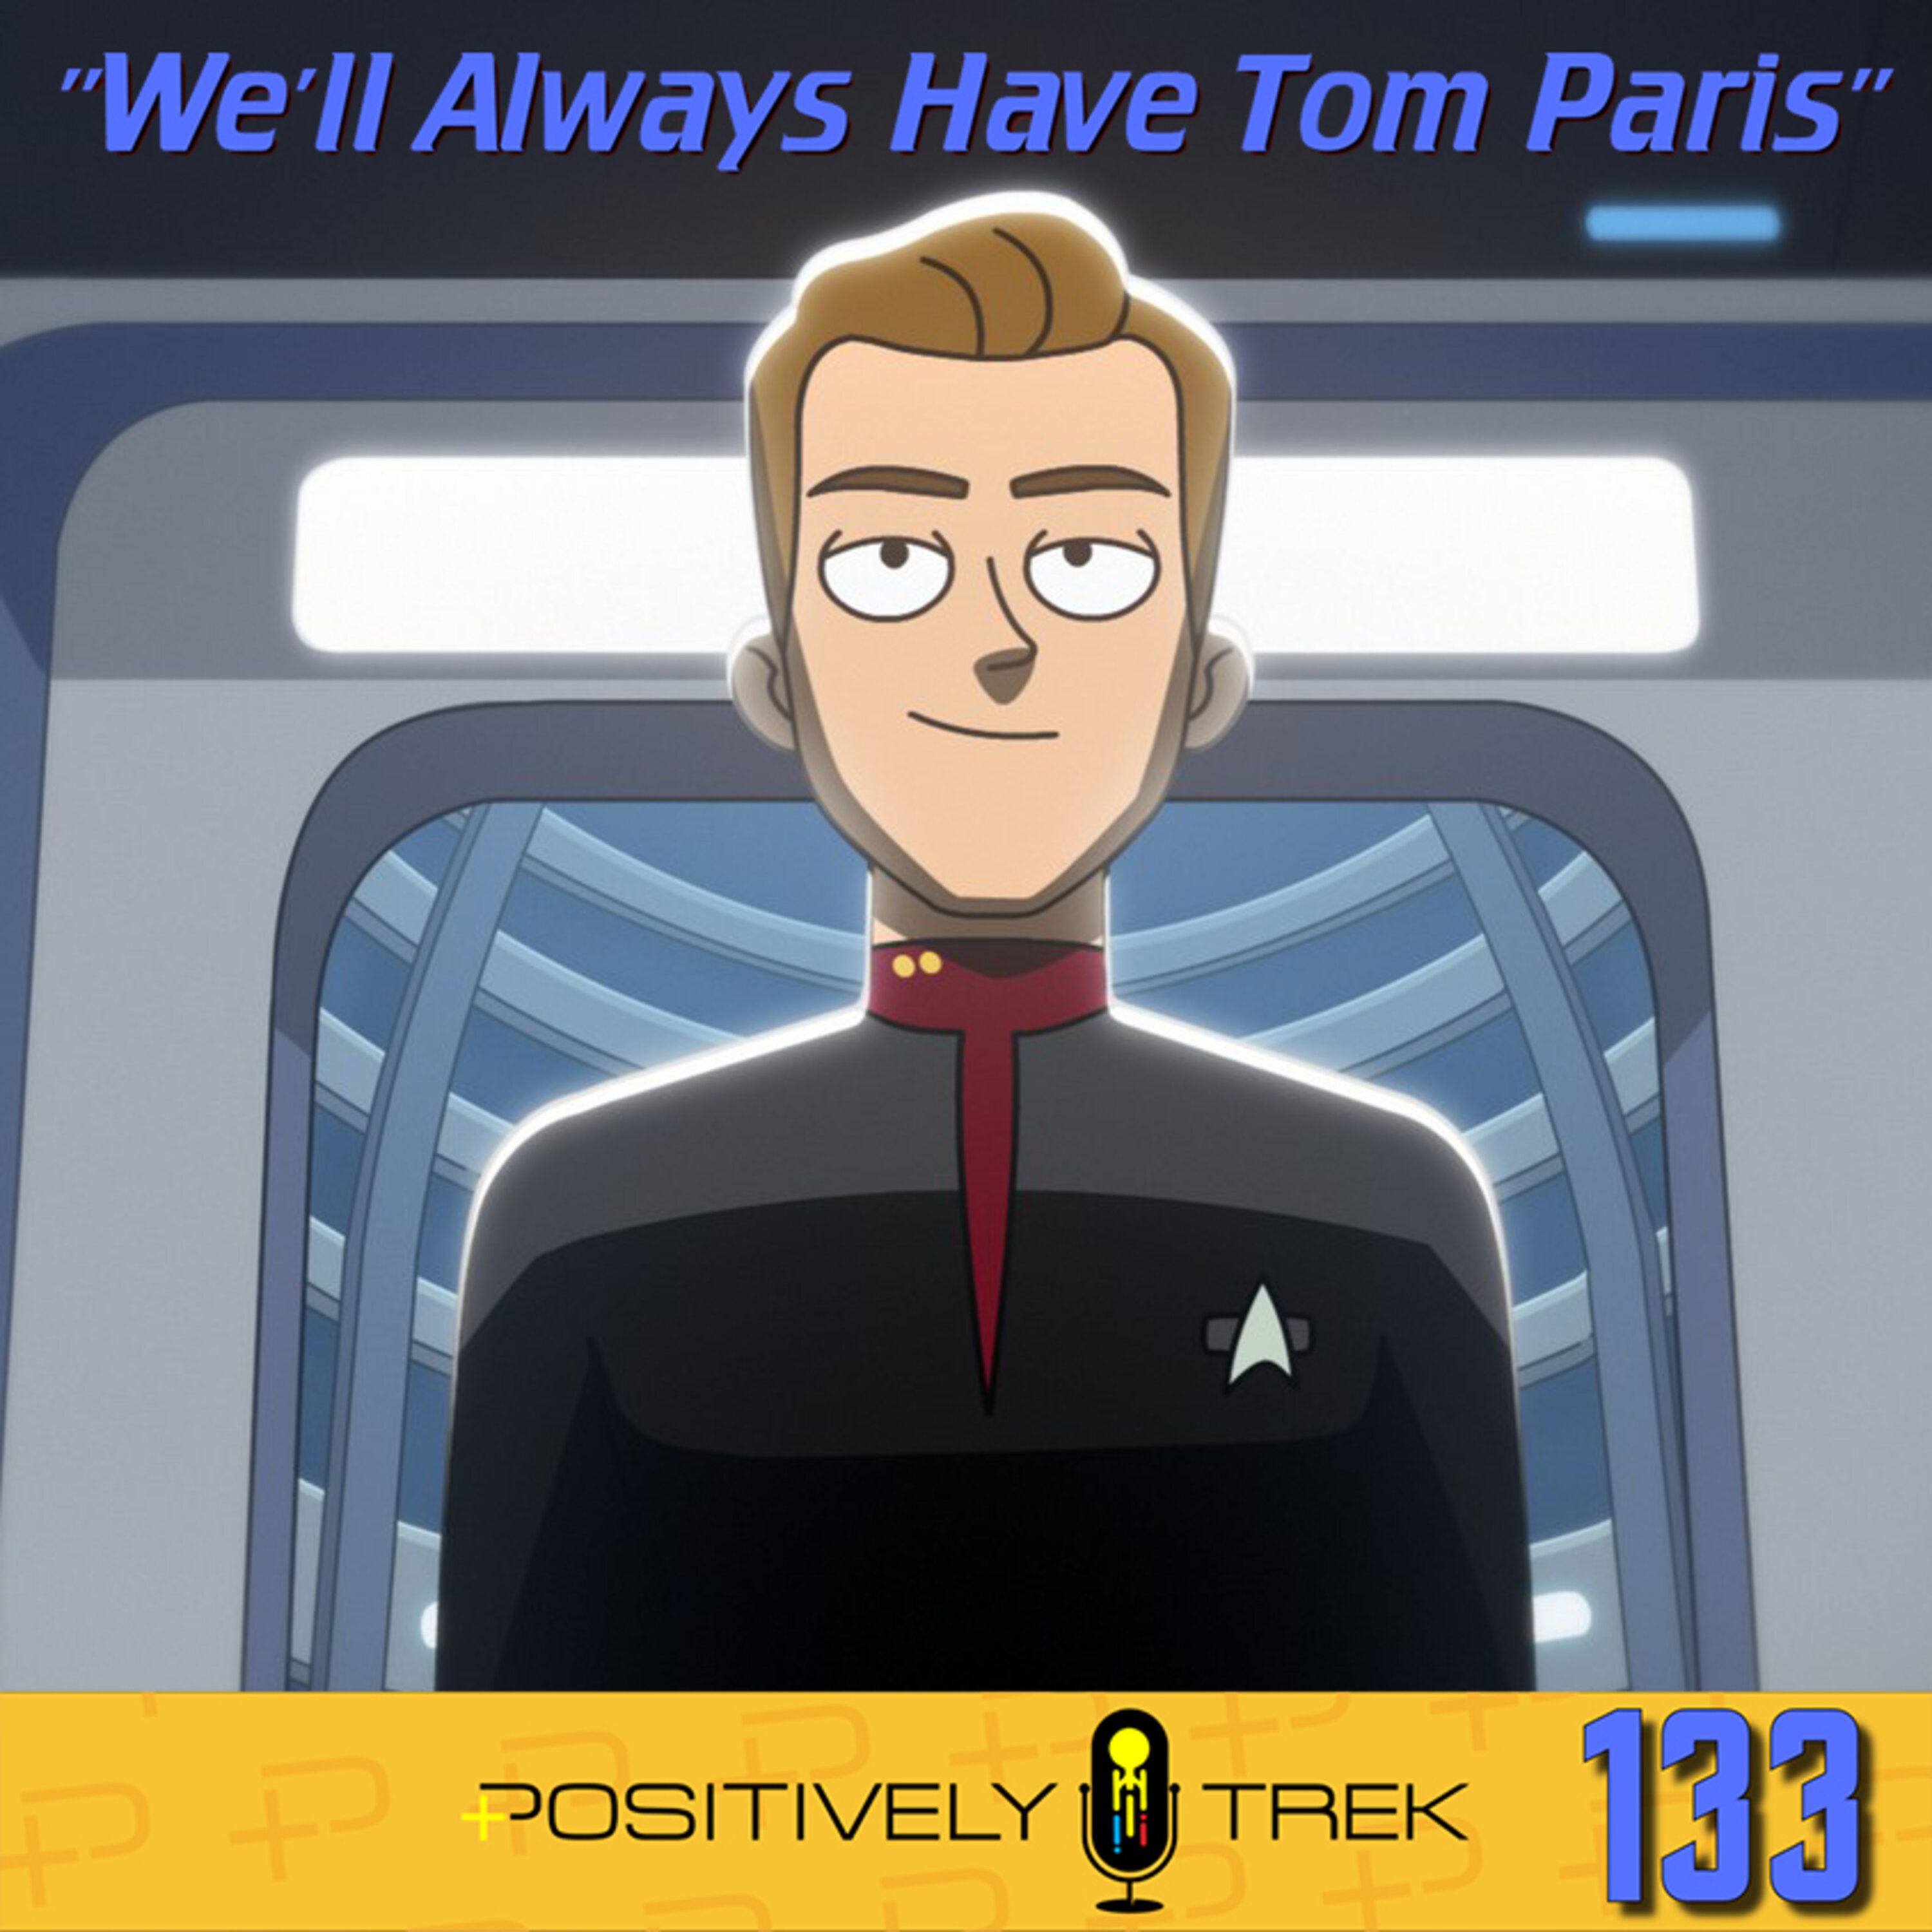 Lower Decks Review: “We’ll Always Have Tom Paris” (2.03) Image